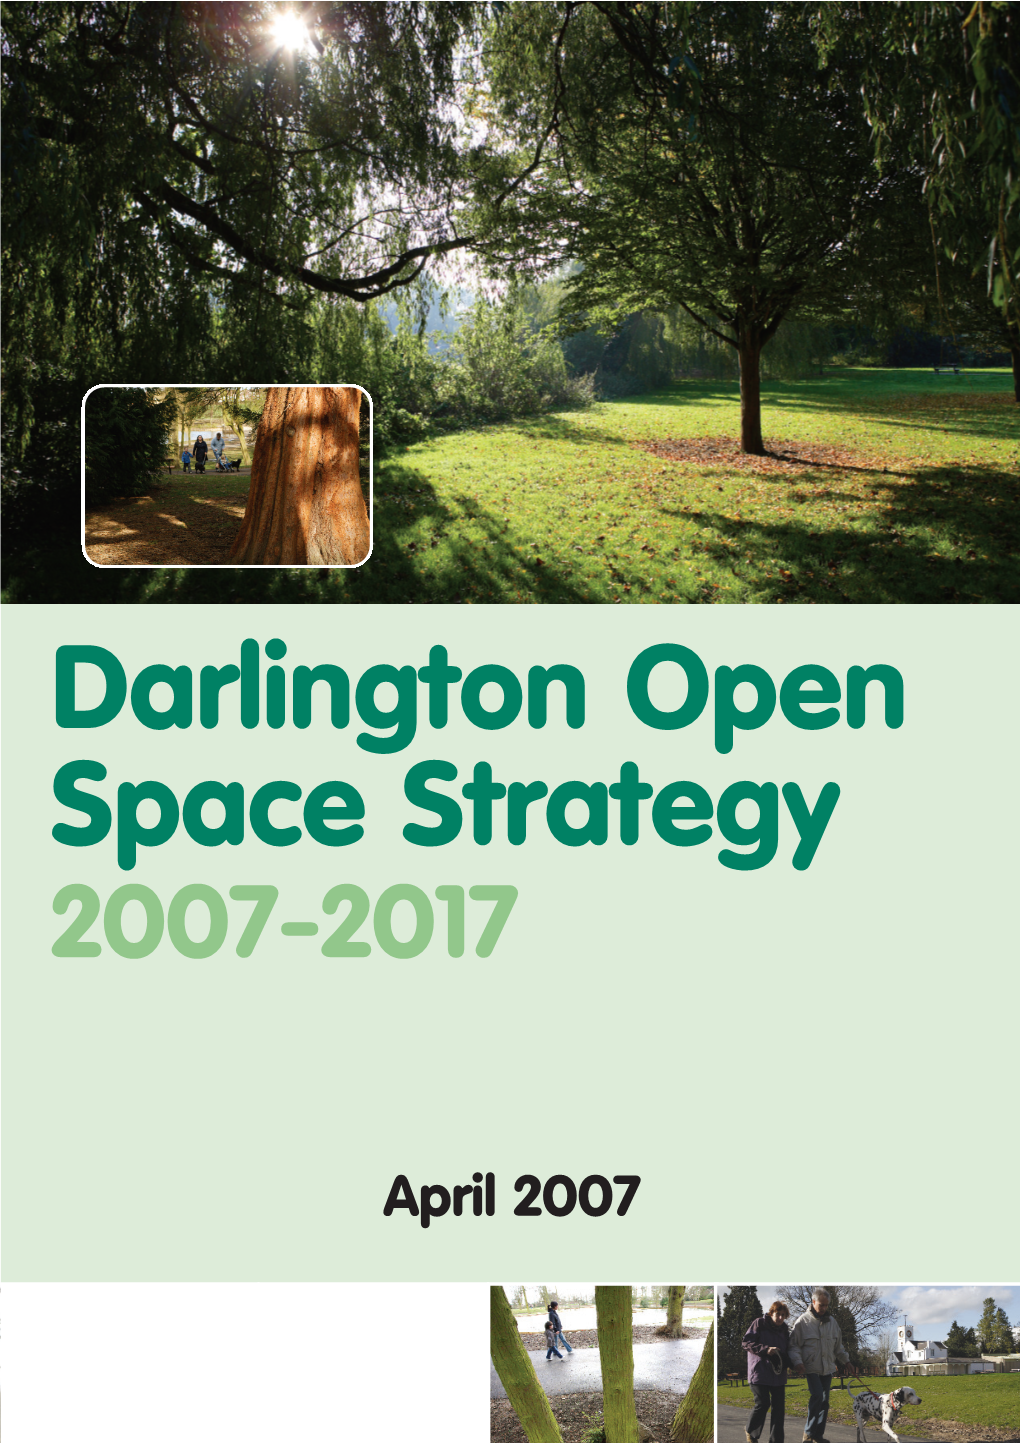 Darlington Open Space Strategy 2007-2017